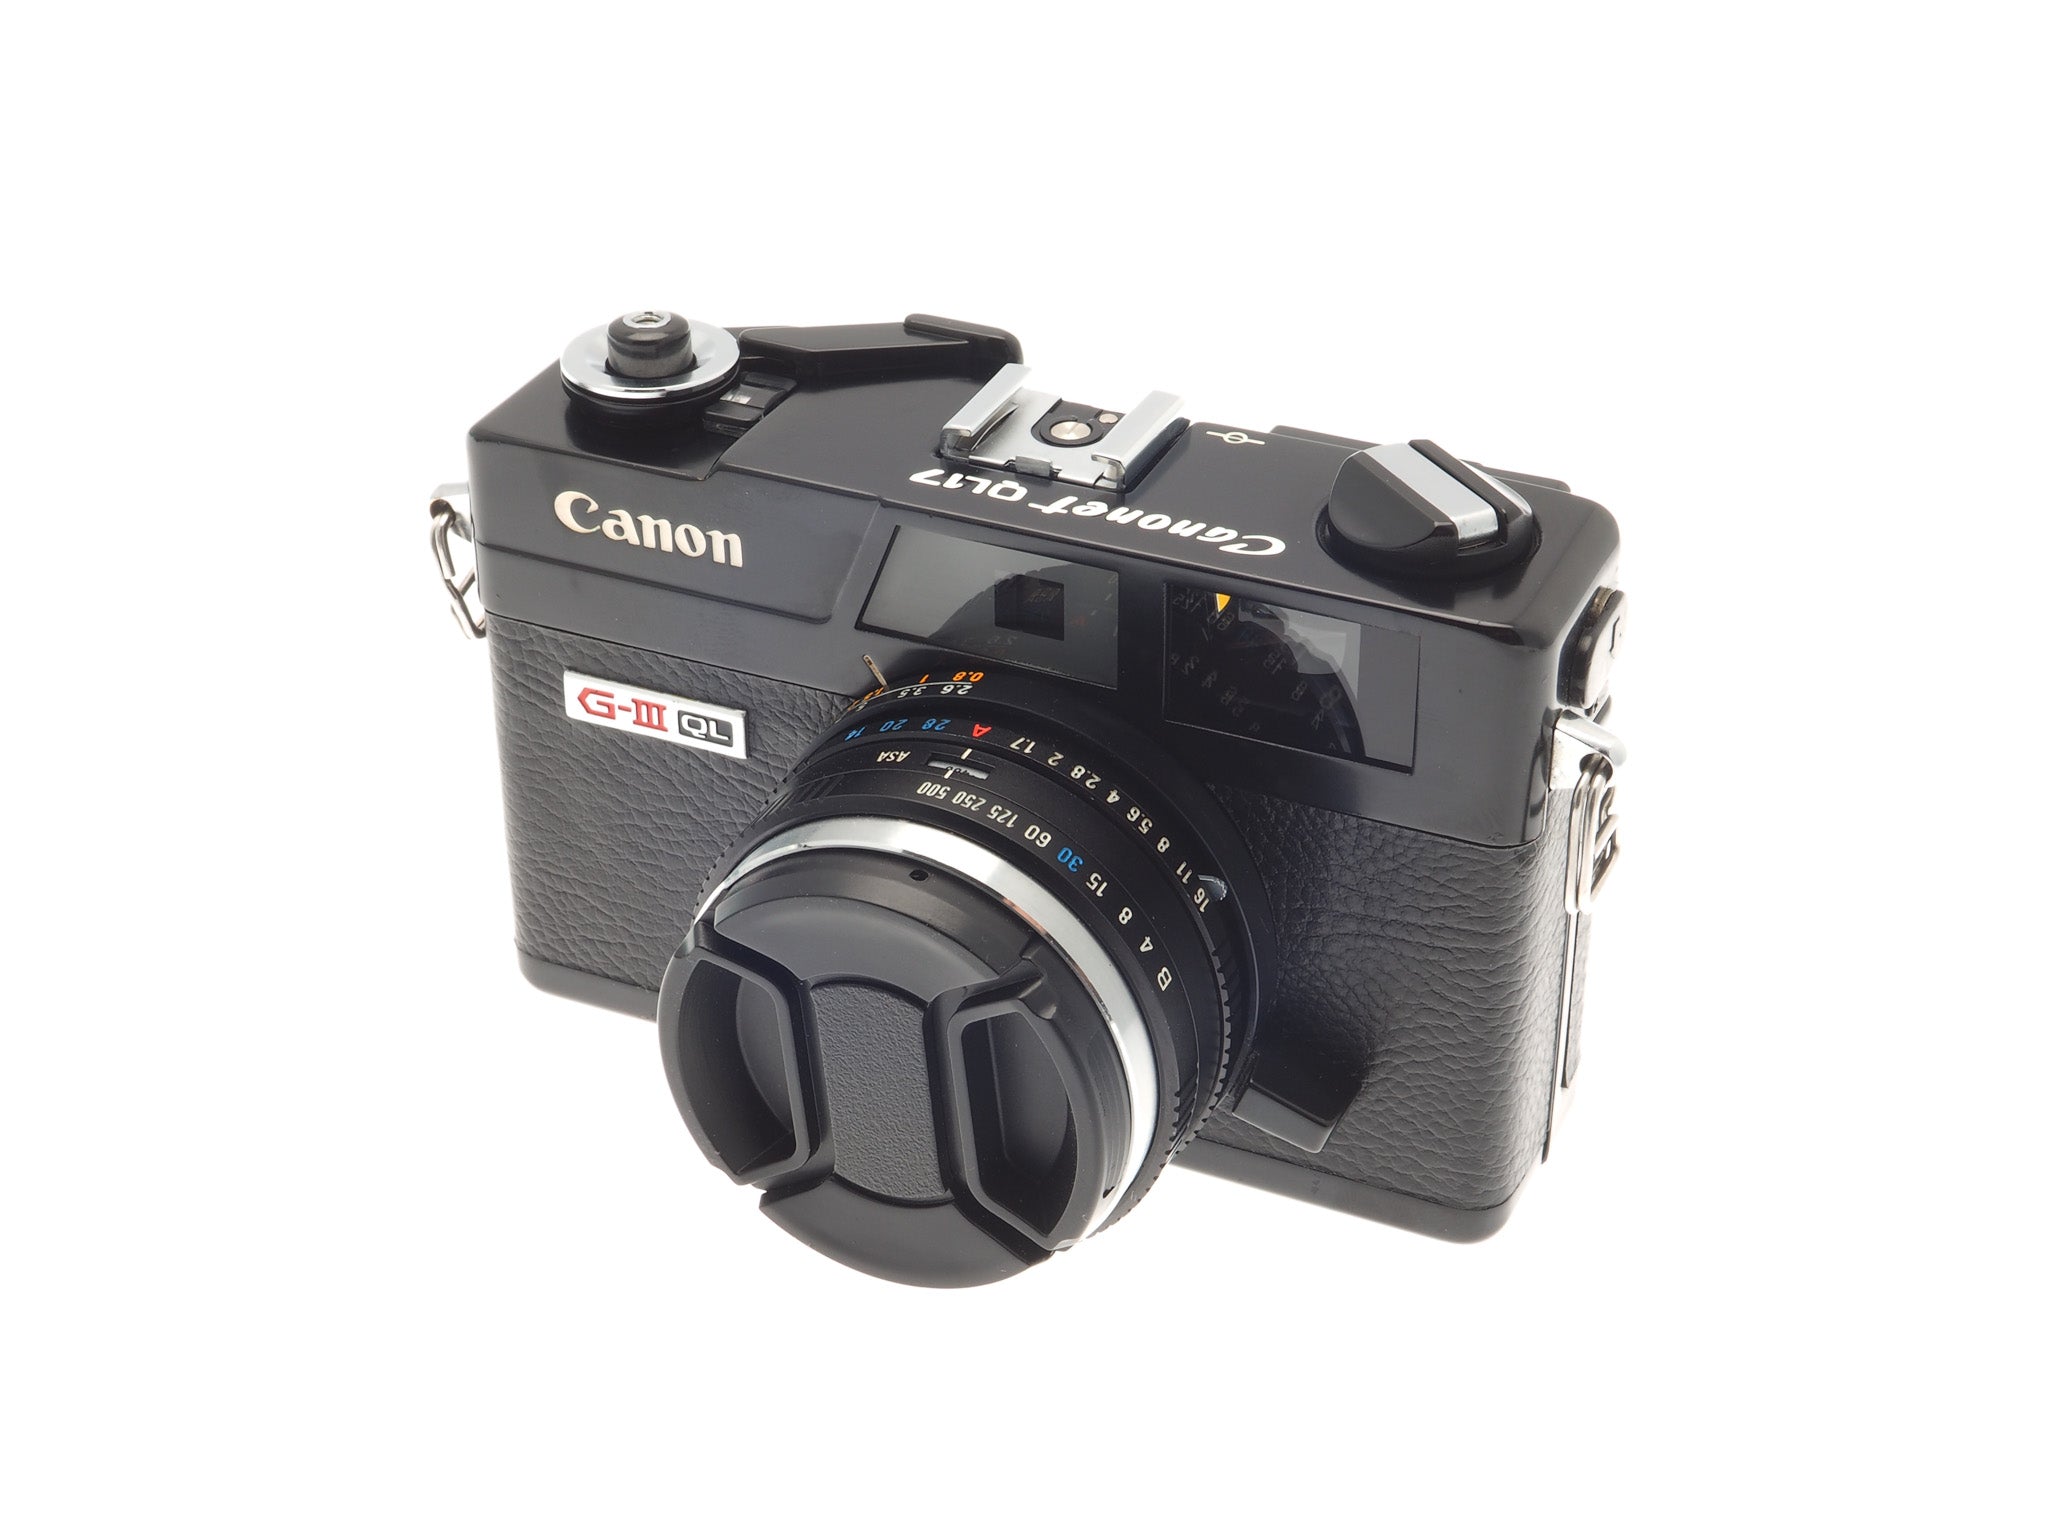 Canon Canonet QL17 G-III - Camera